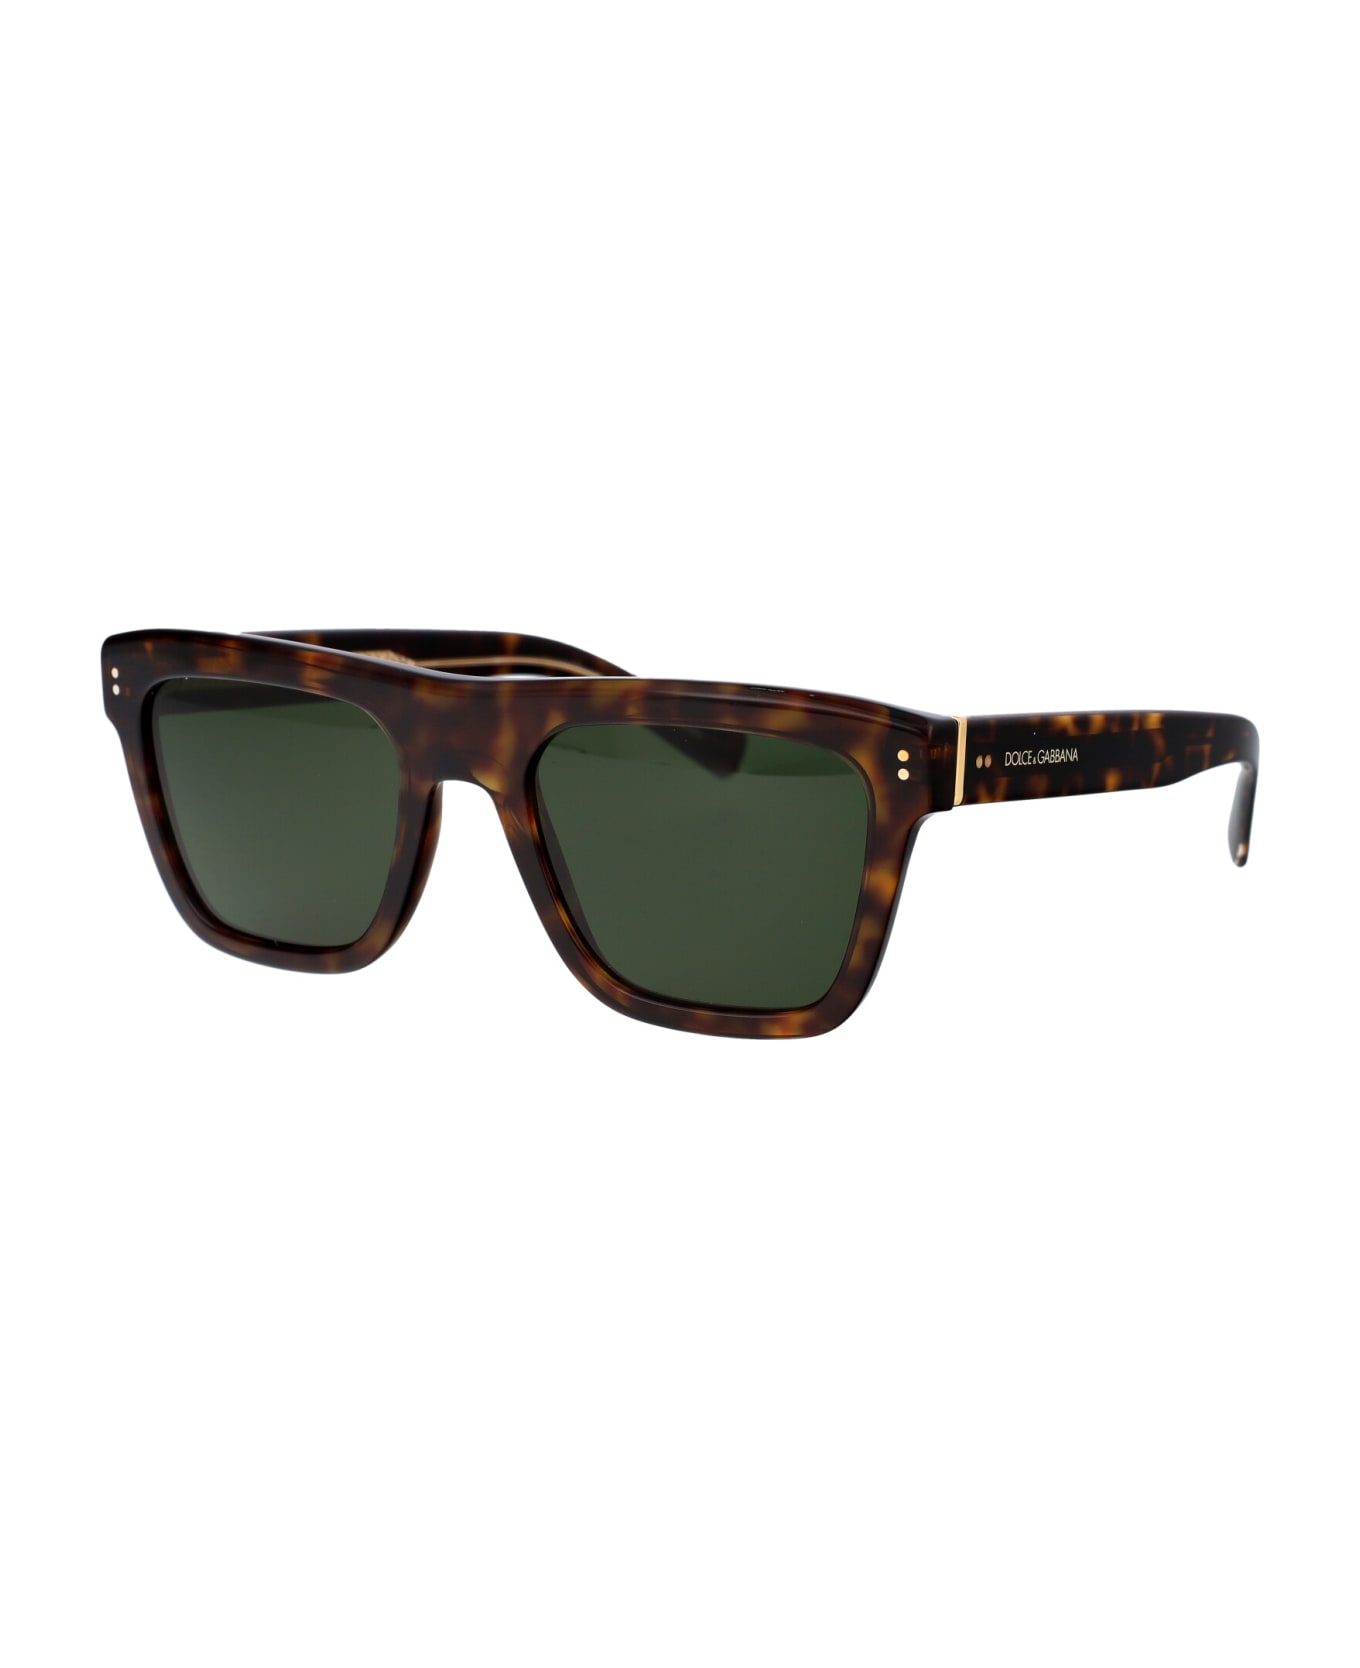 Dolce & Gabbana Eyewear 0dg4413 Sunglasses - 675/R5 Black/Crystal